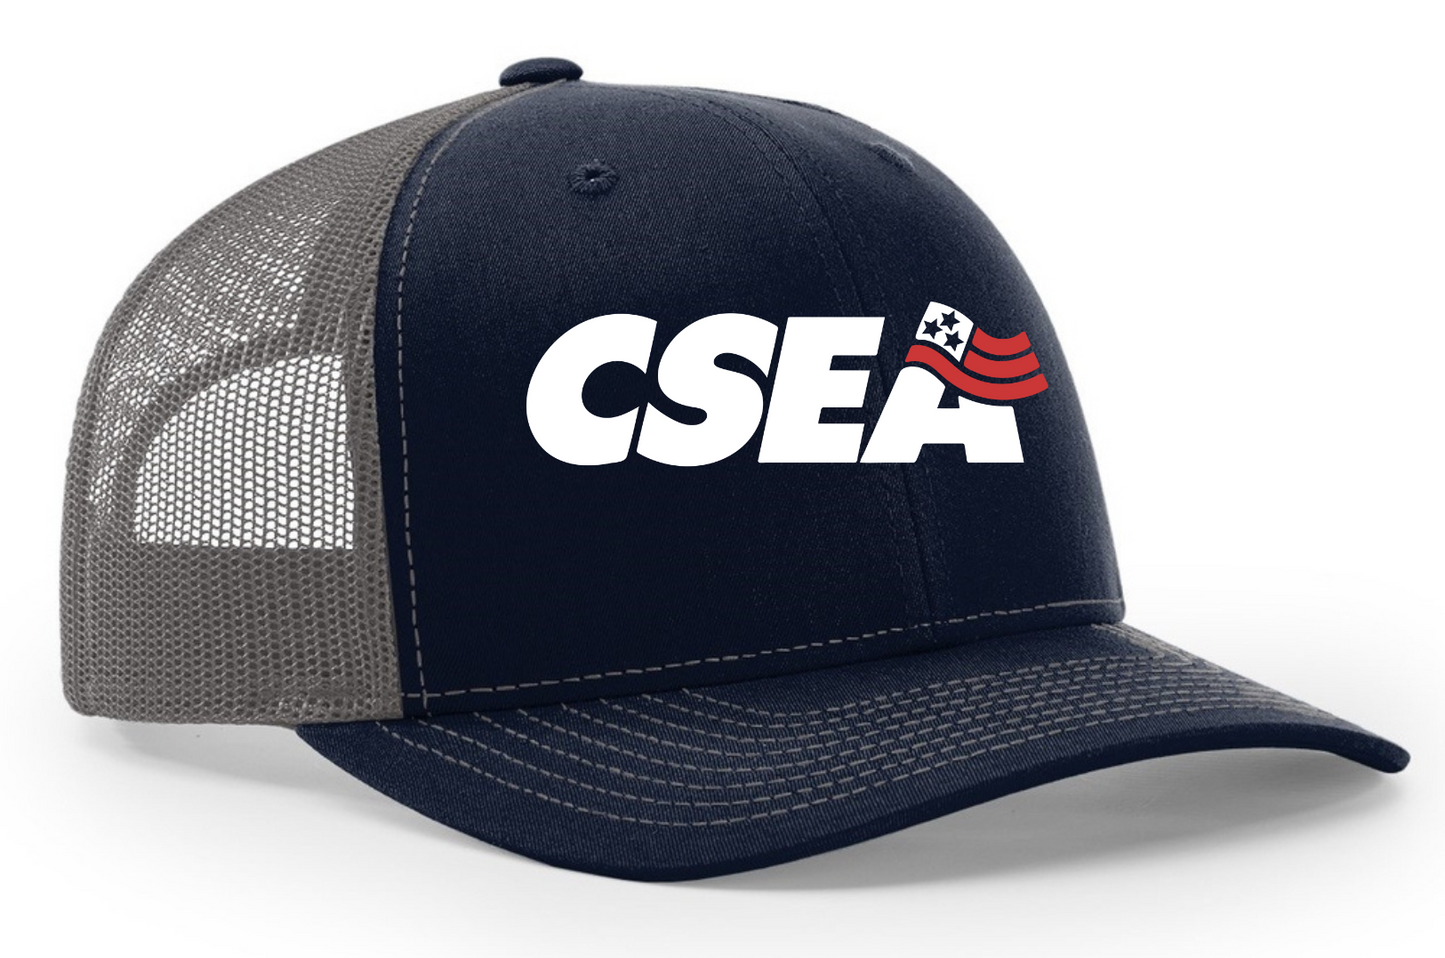 Embroidered CSEA Logo Trucker Snapback Hat